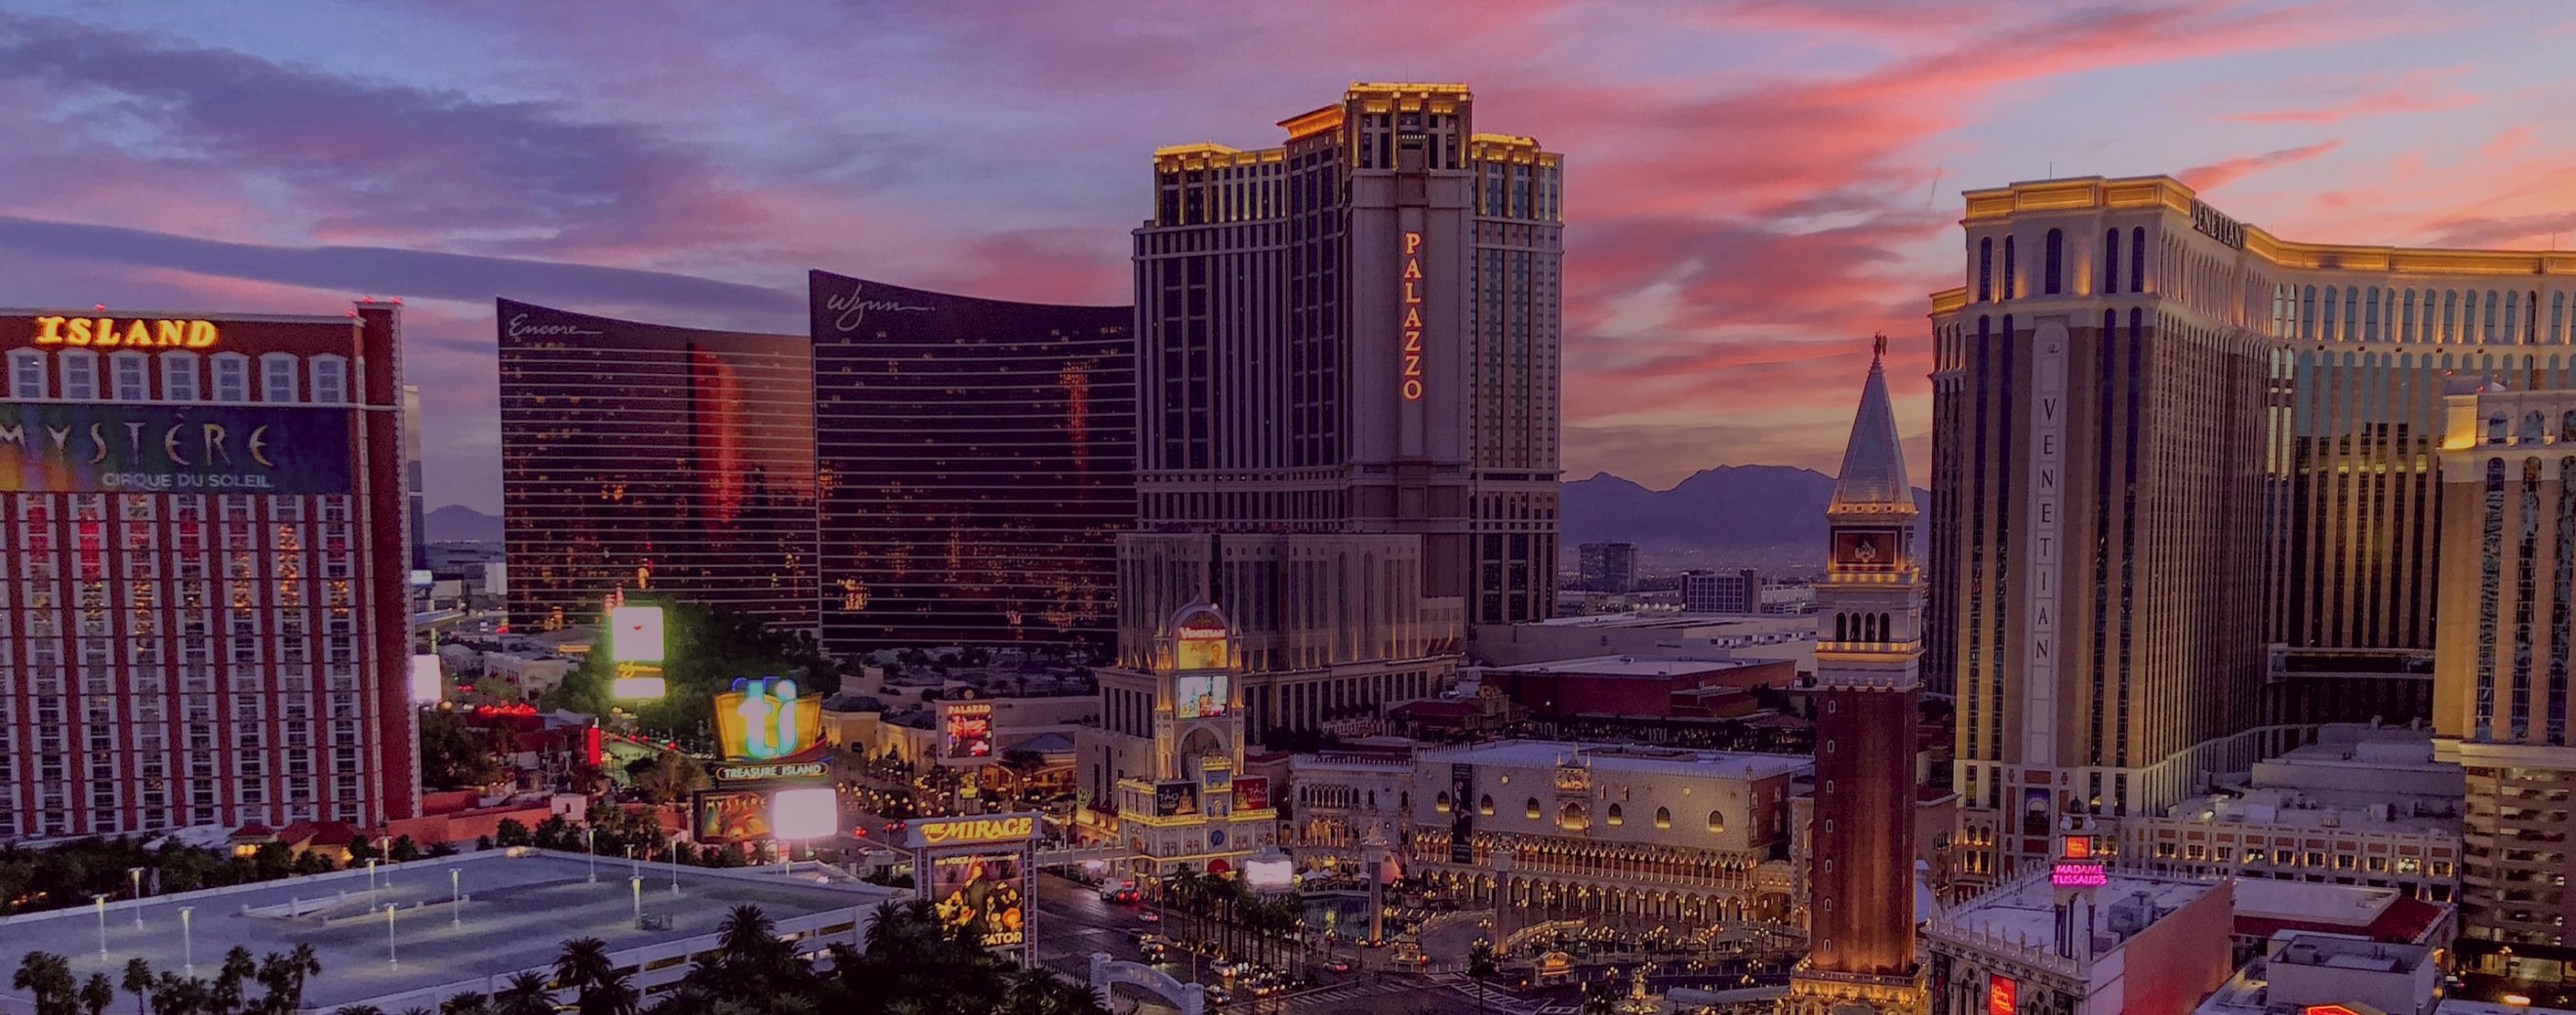 View of Las Vegas